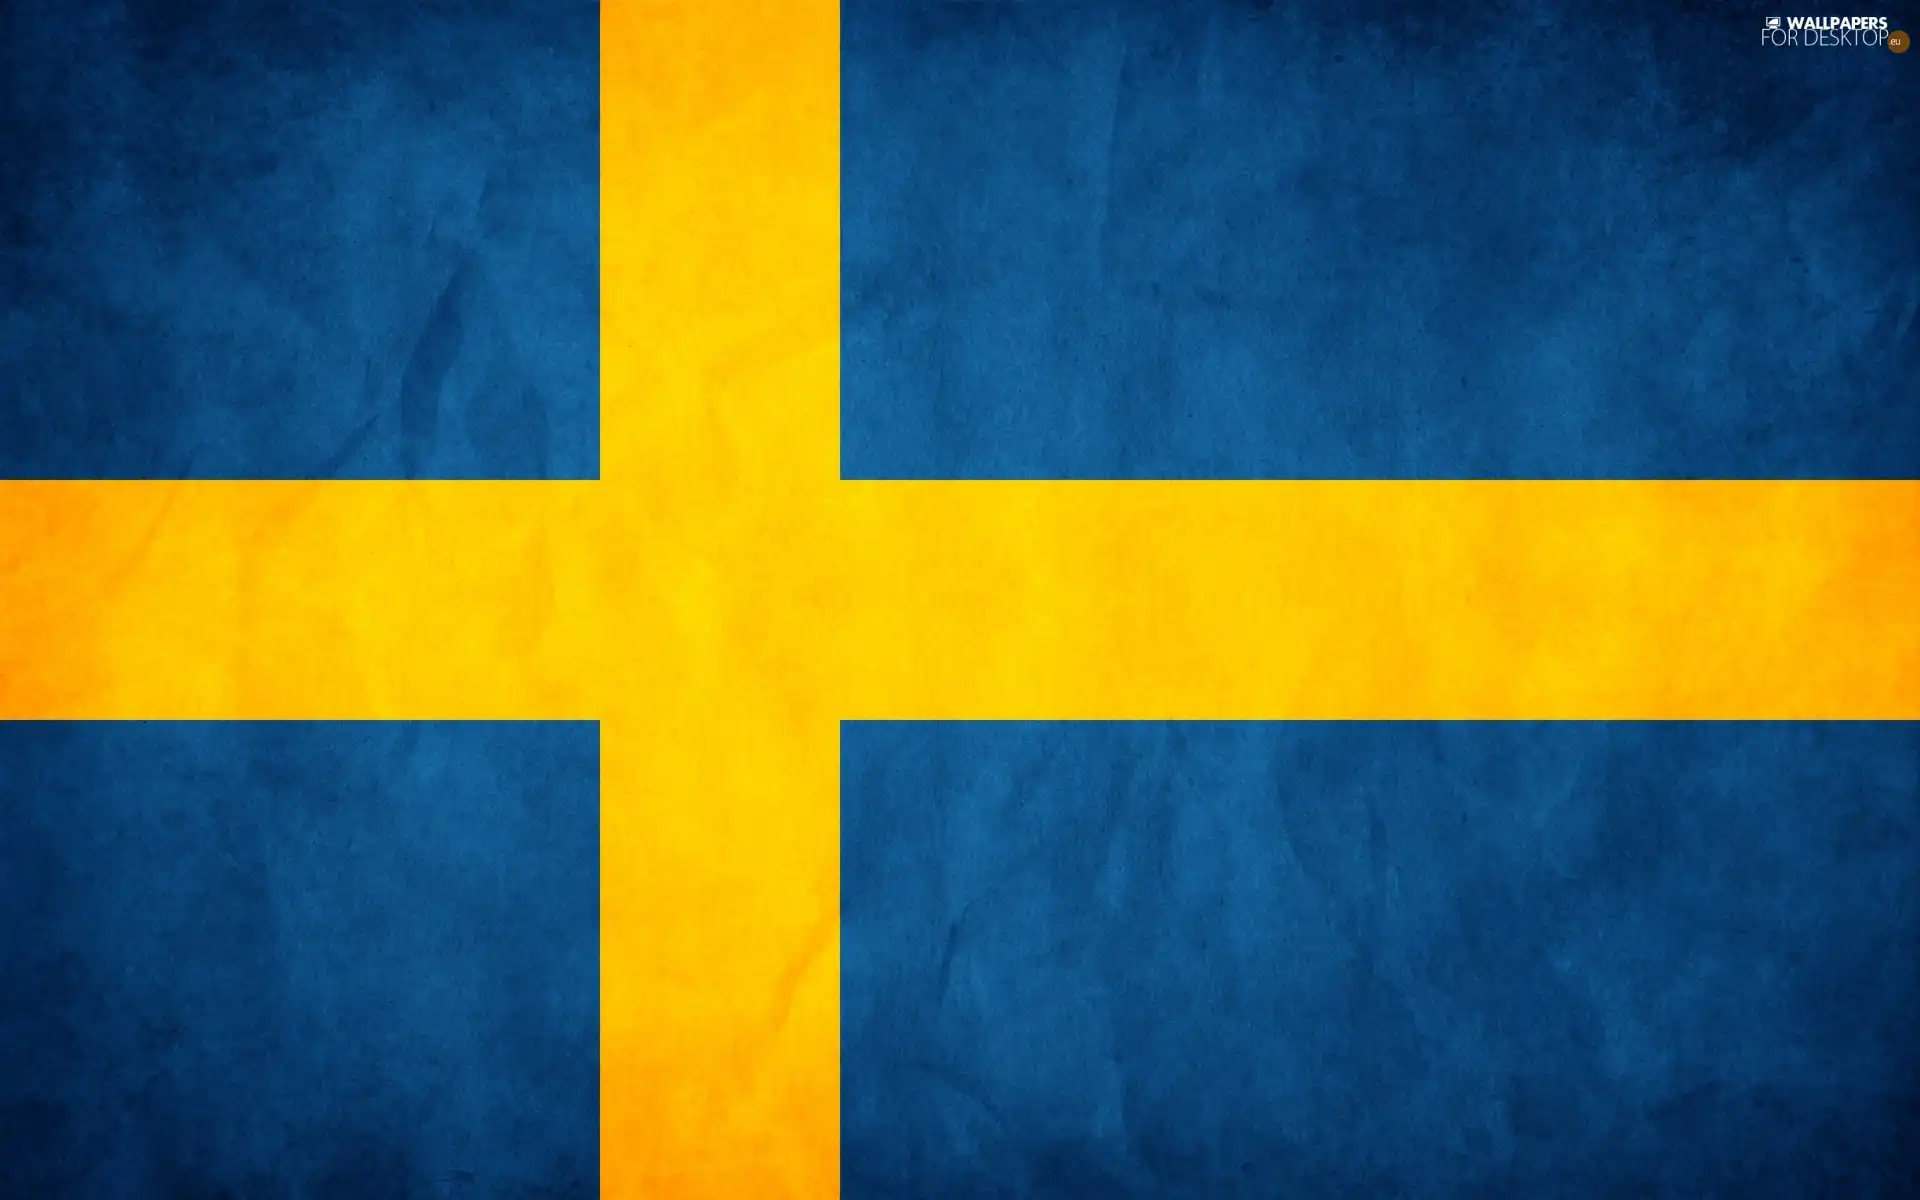 Sweden, flag, Member